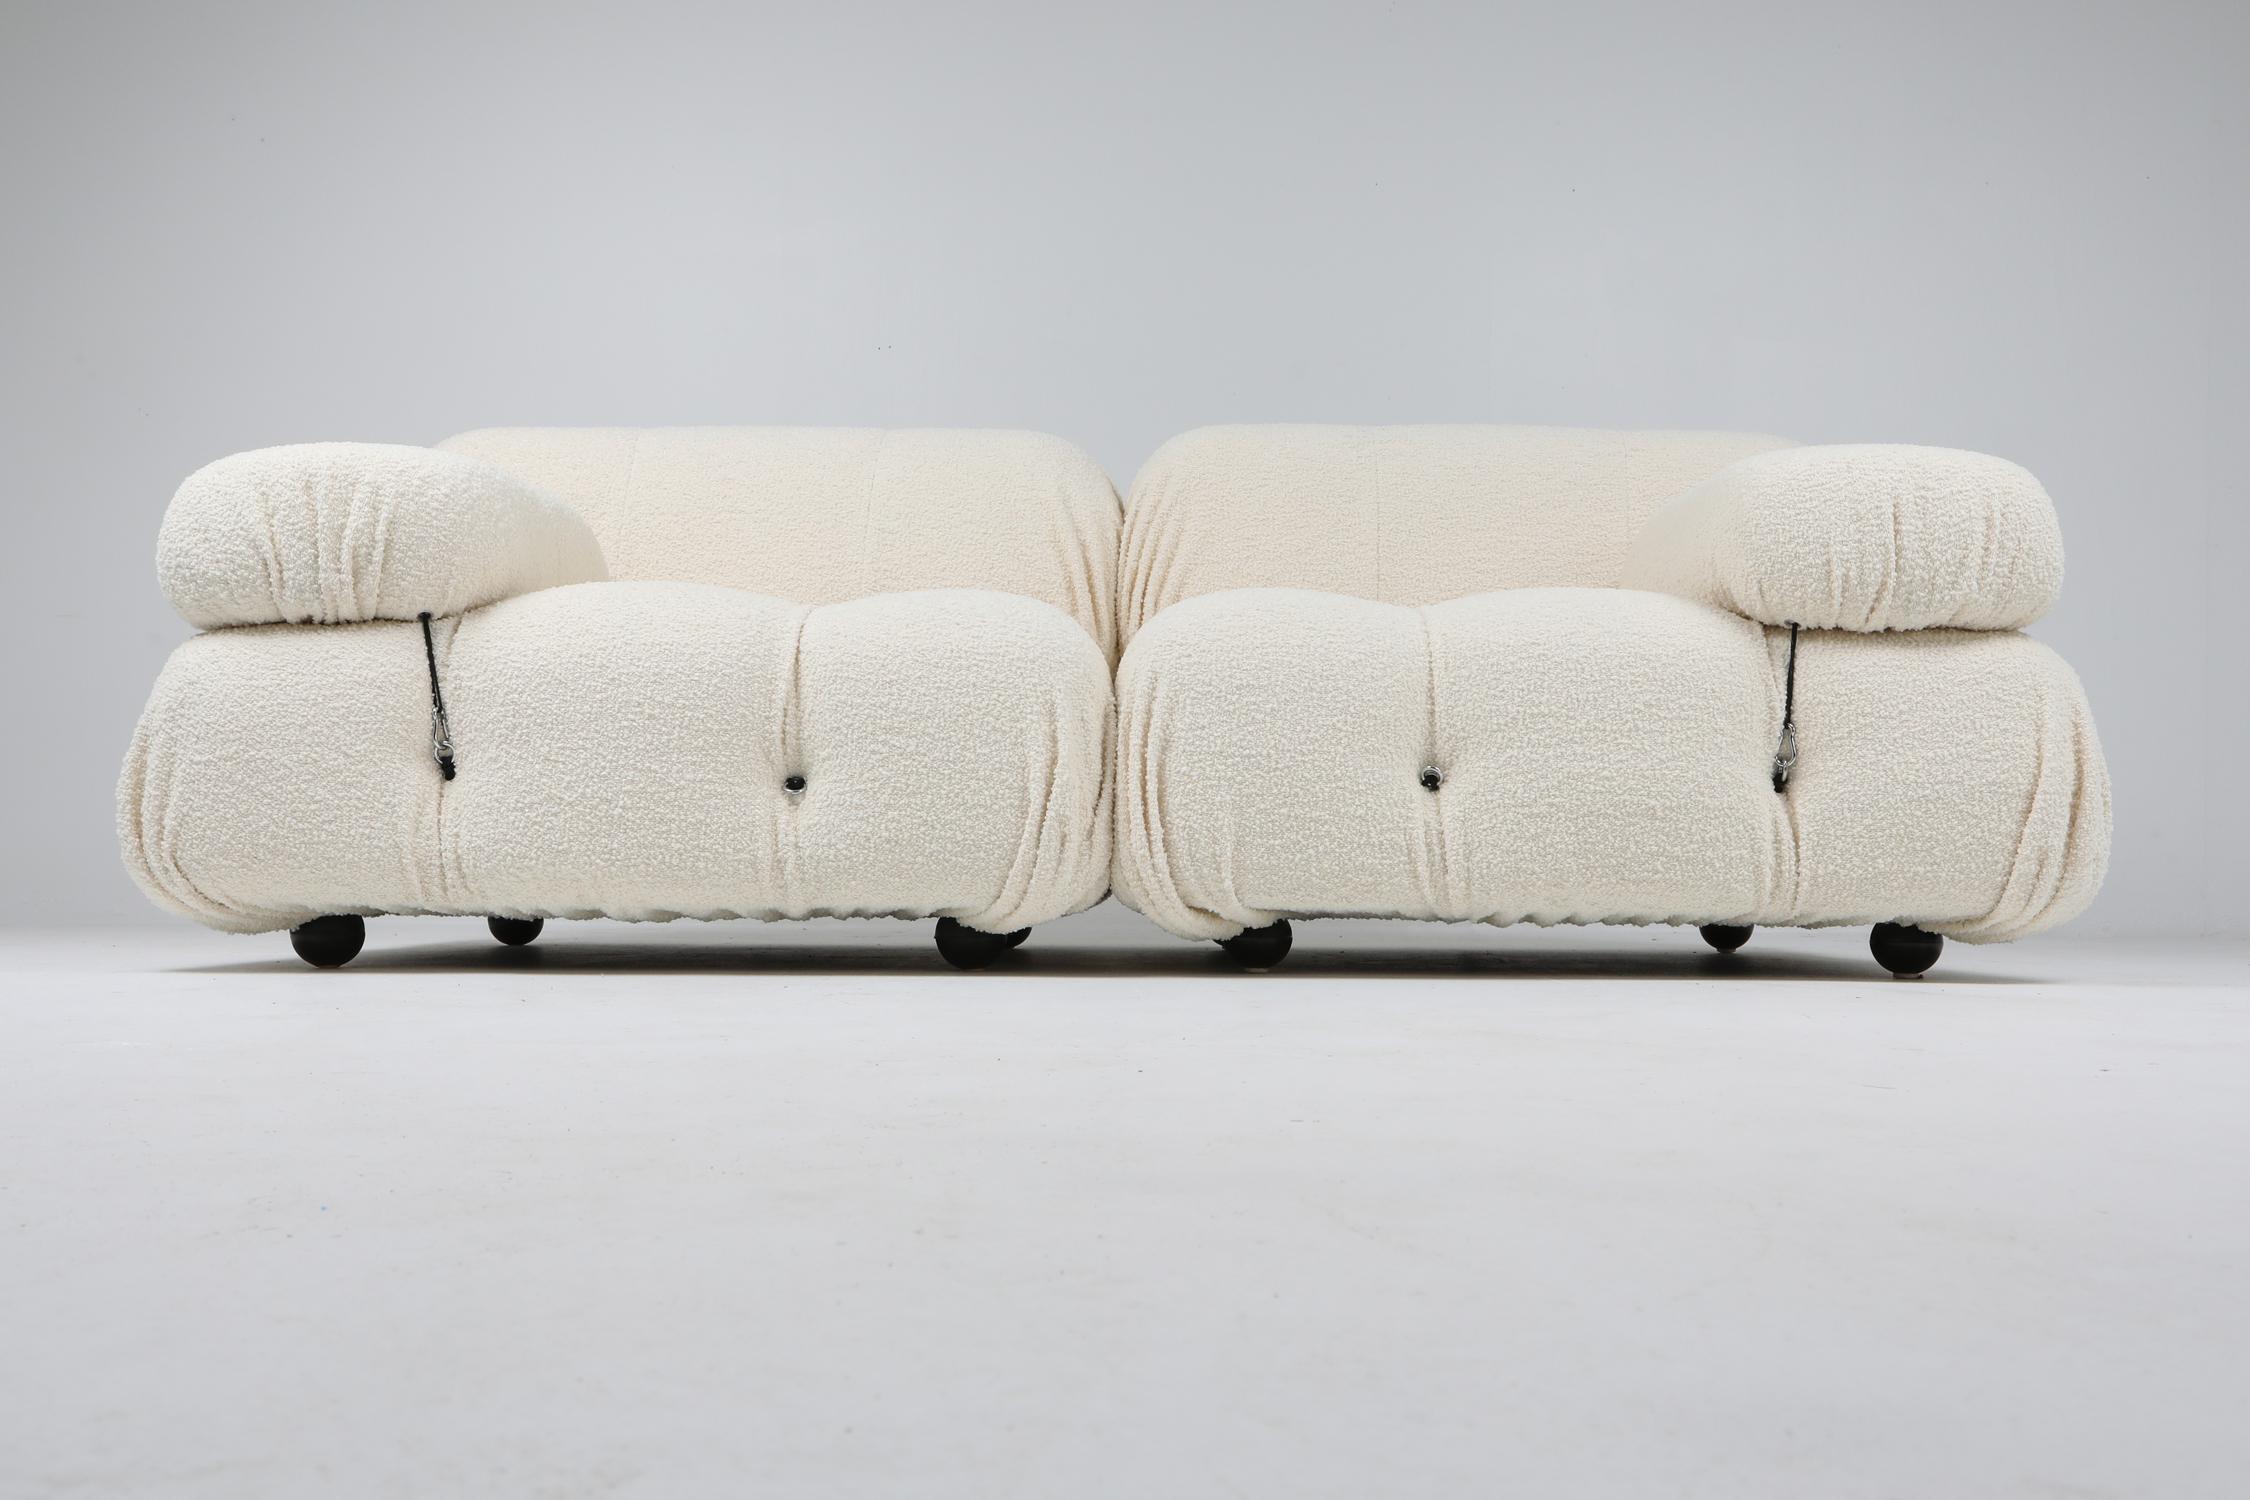 20th Century Camaleonda Sofa in Boucle Wool by Mario Bellini